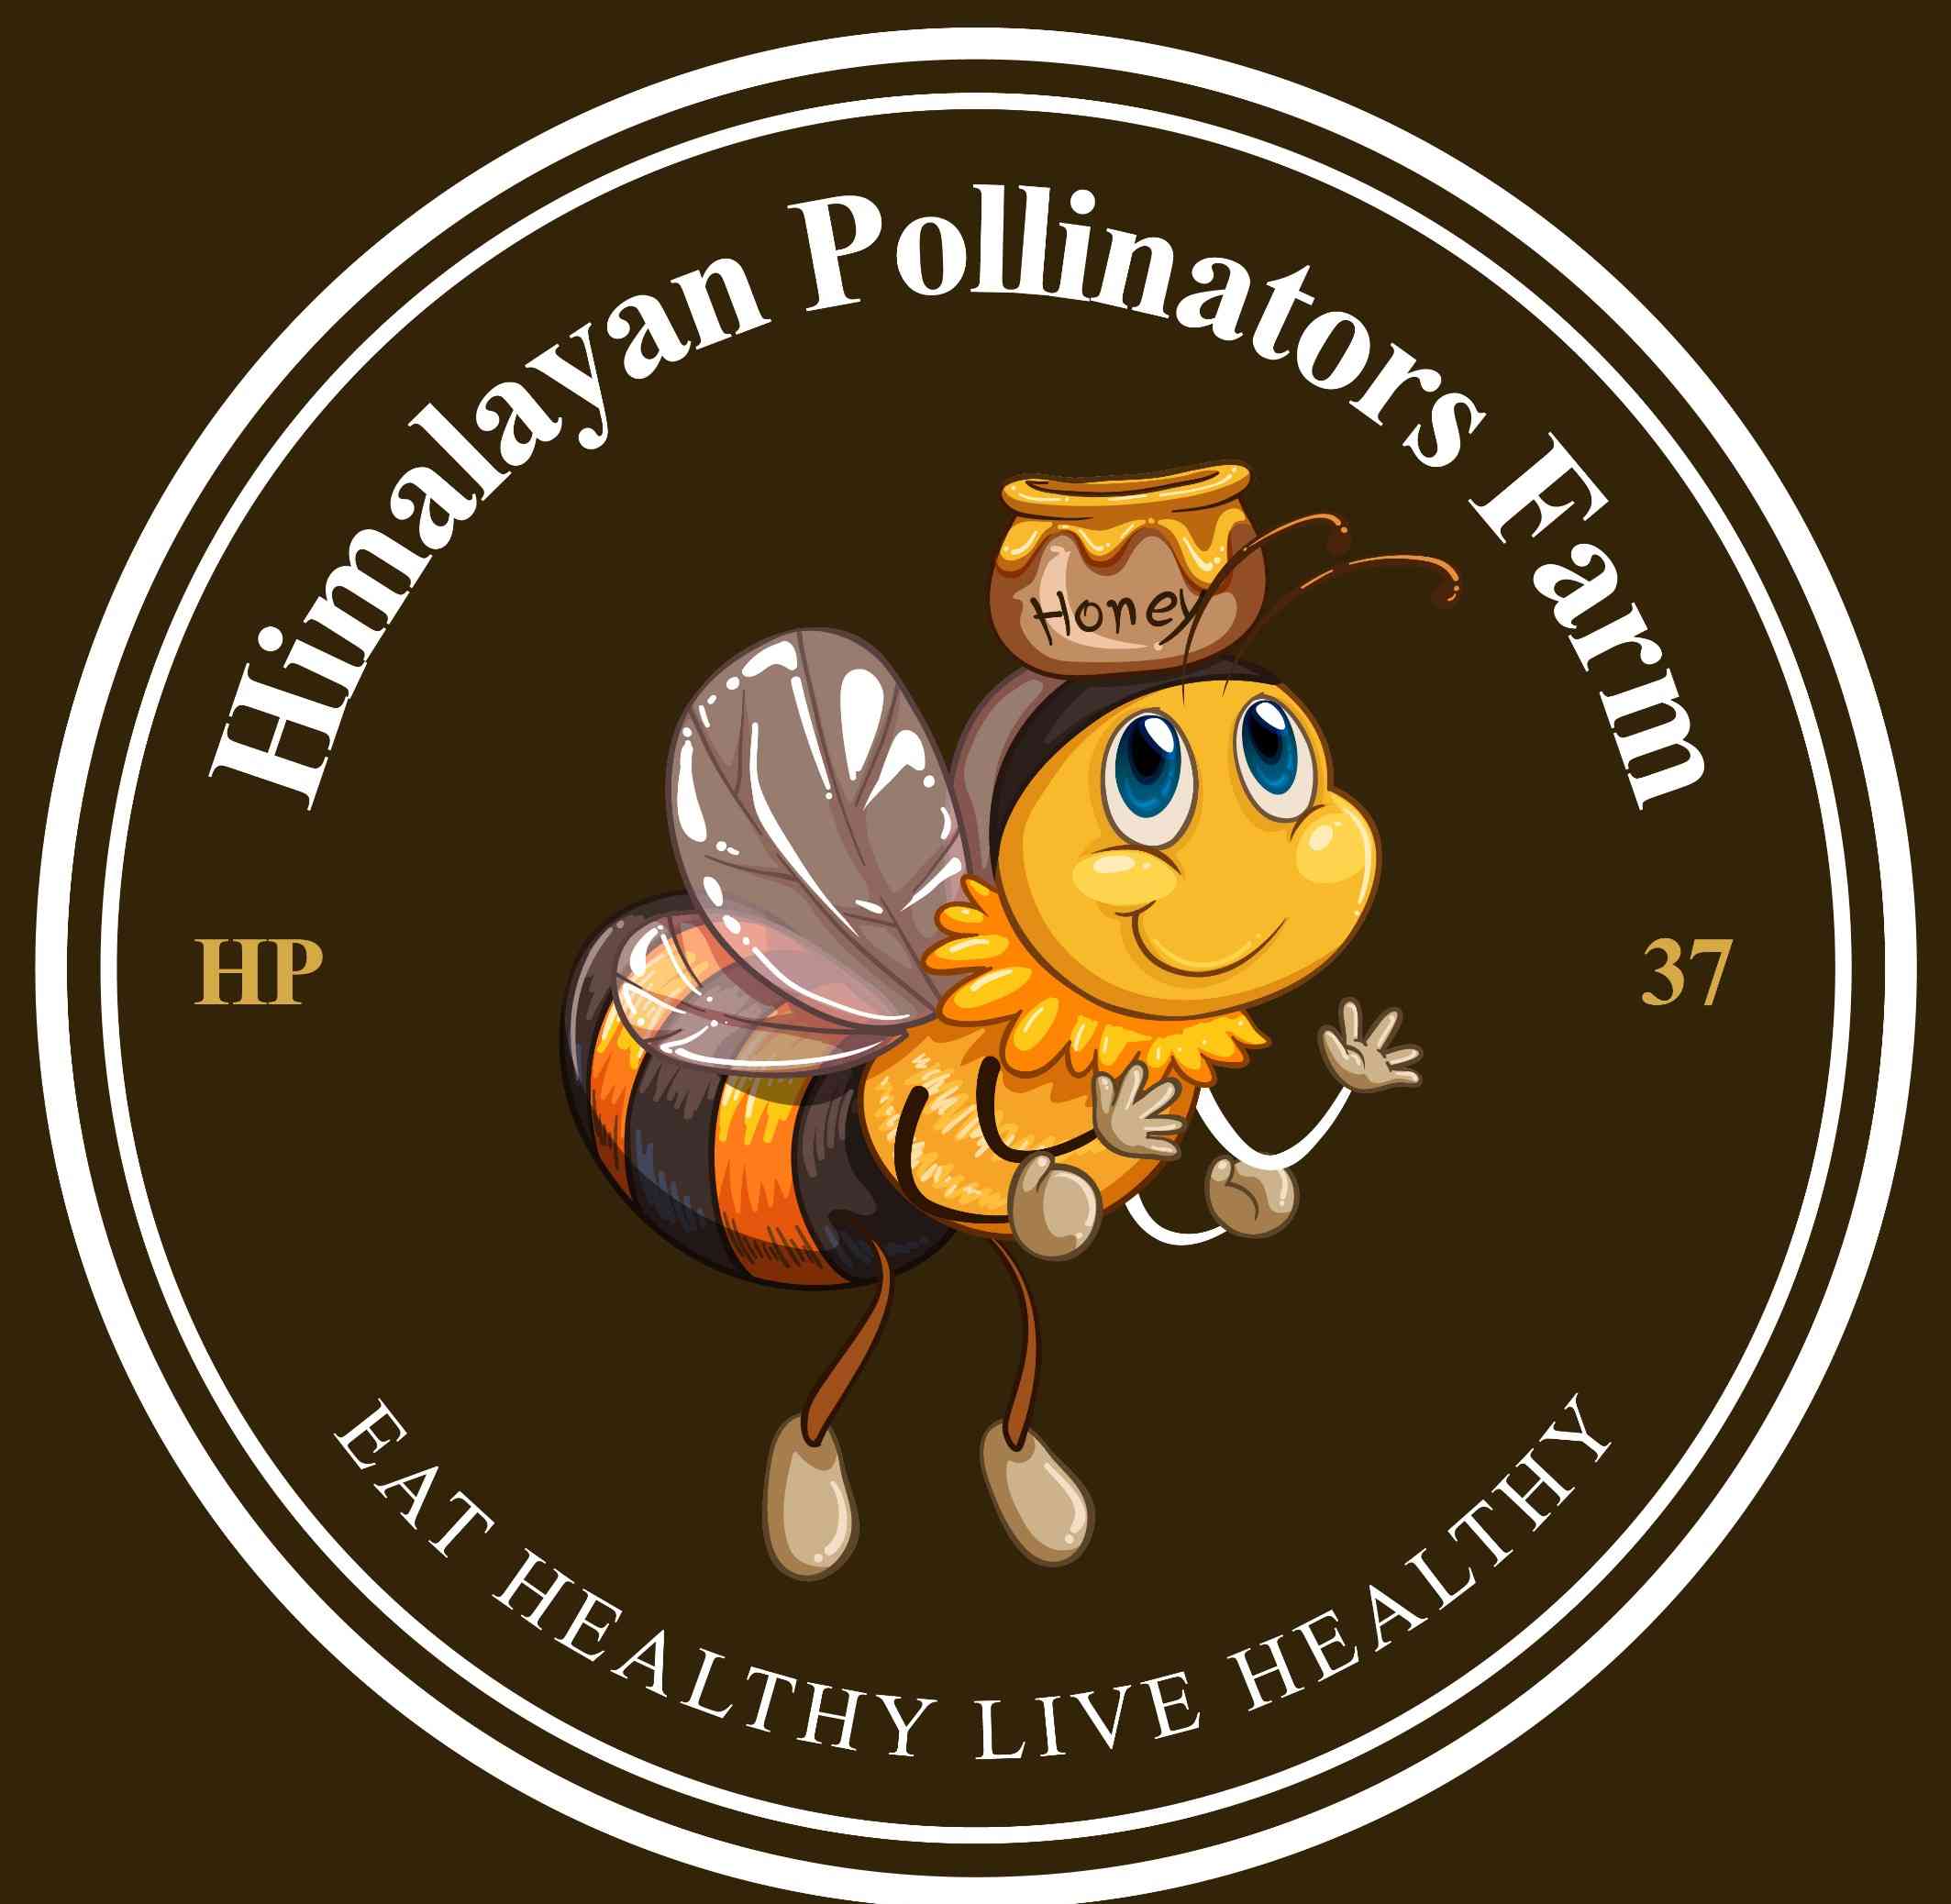 Himalayan pollinators farm